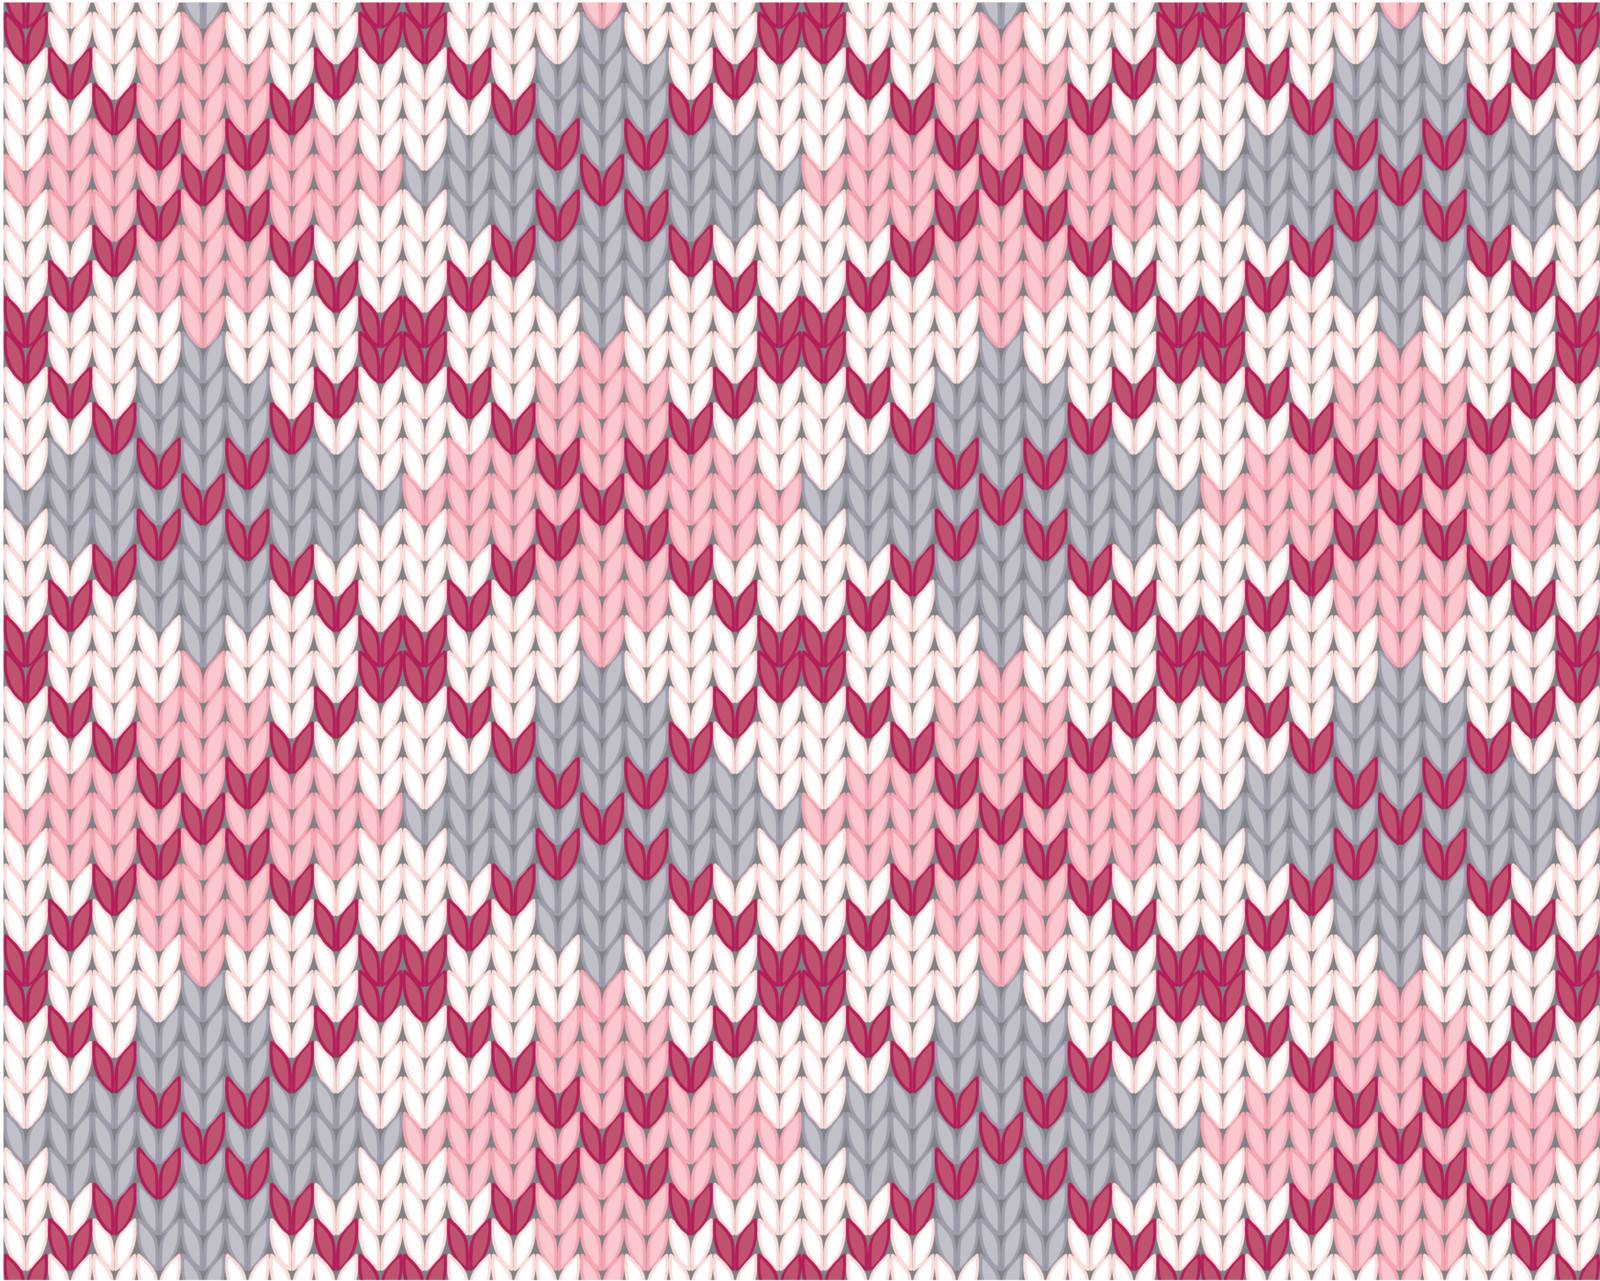 Knitted pattern with rhombus by evdakovka